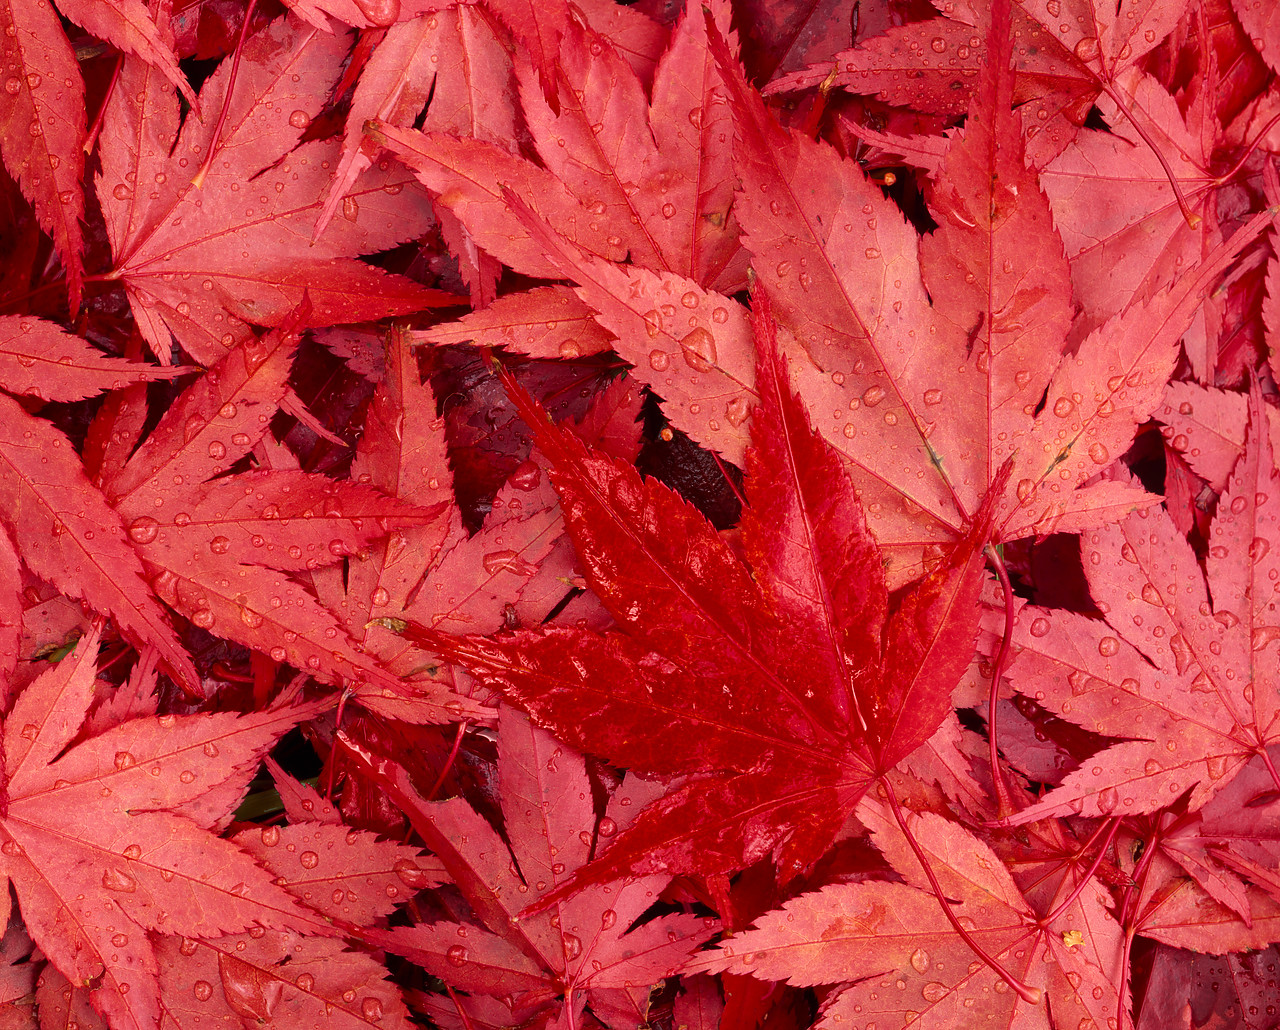 #924135-1 - Japanese Maple Leaves, Lake District, Cumbria, England